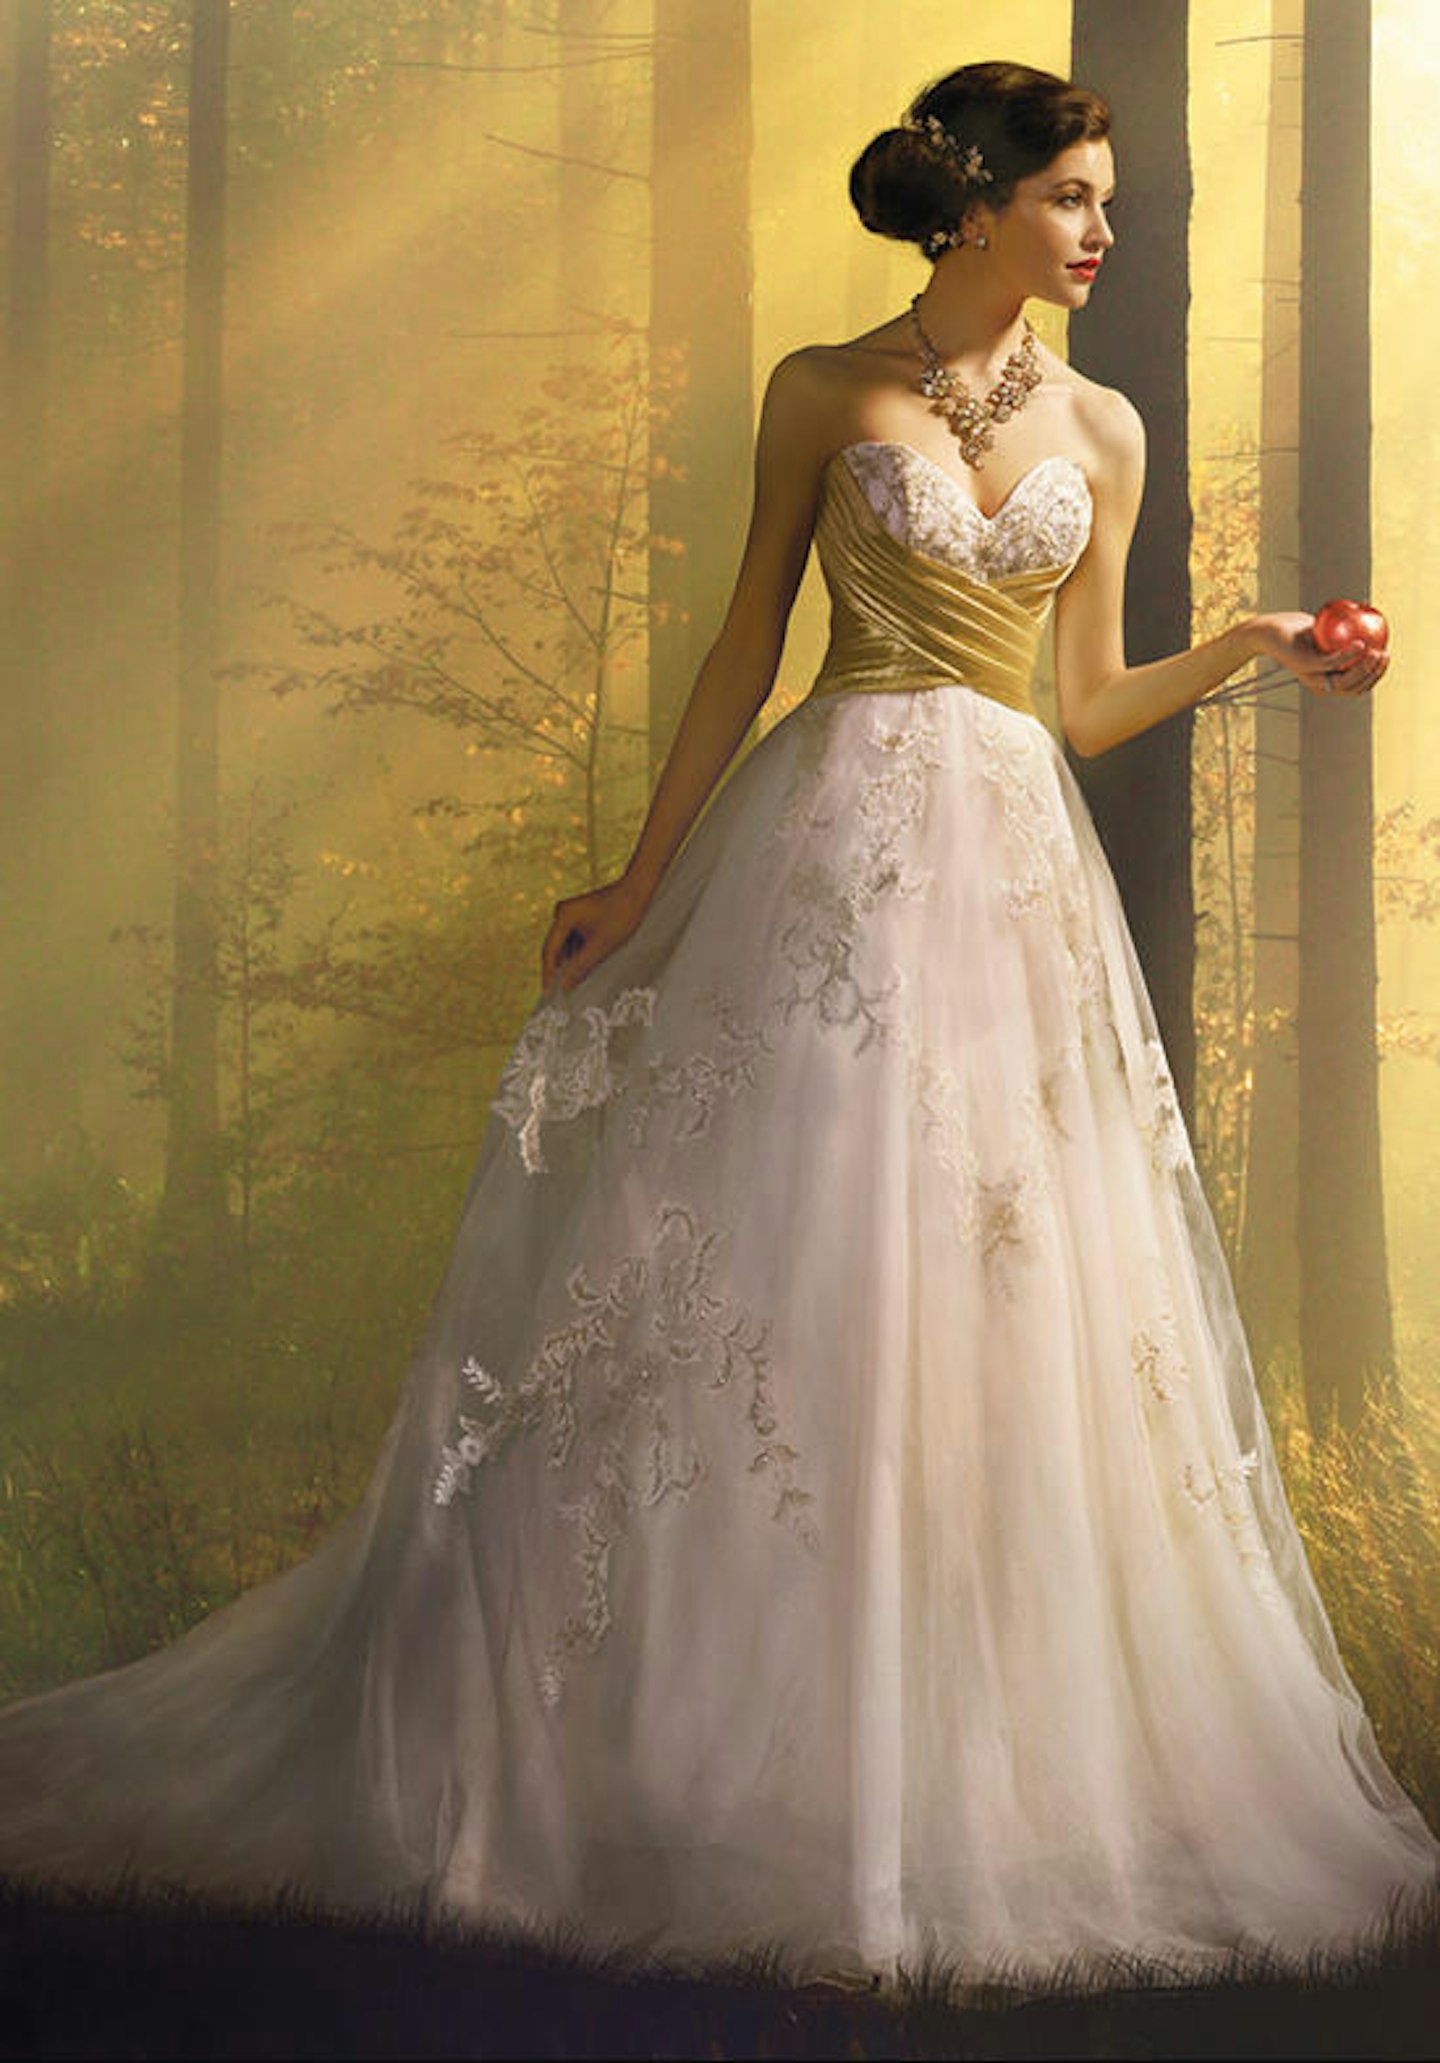 Disney wedding dress